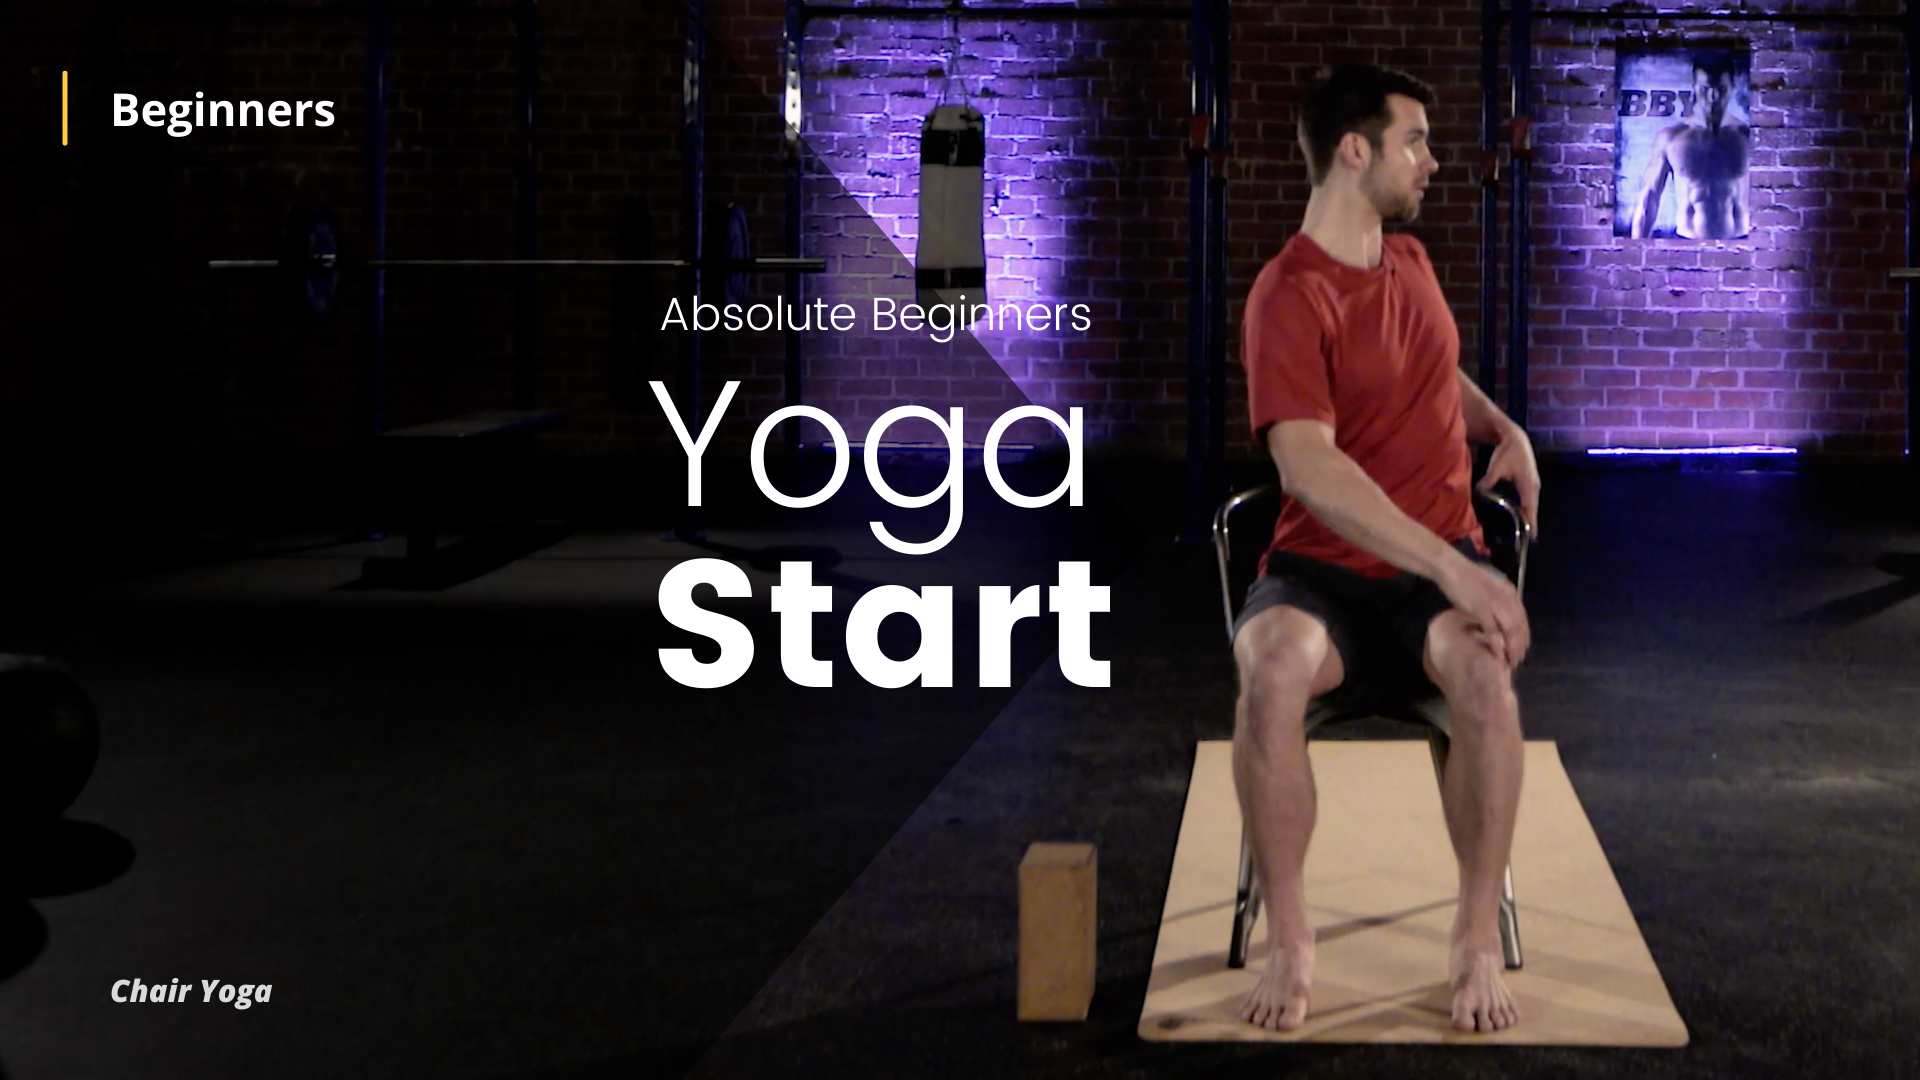 Beginners Chair Yoga | Yoga 101 For Absolute Beginners | Yoga Start